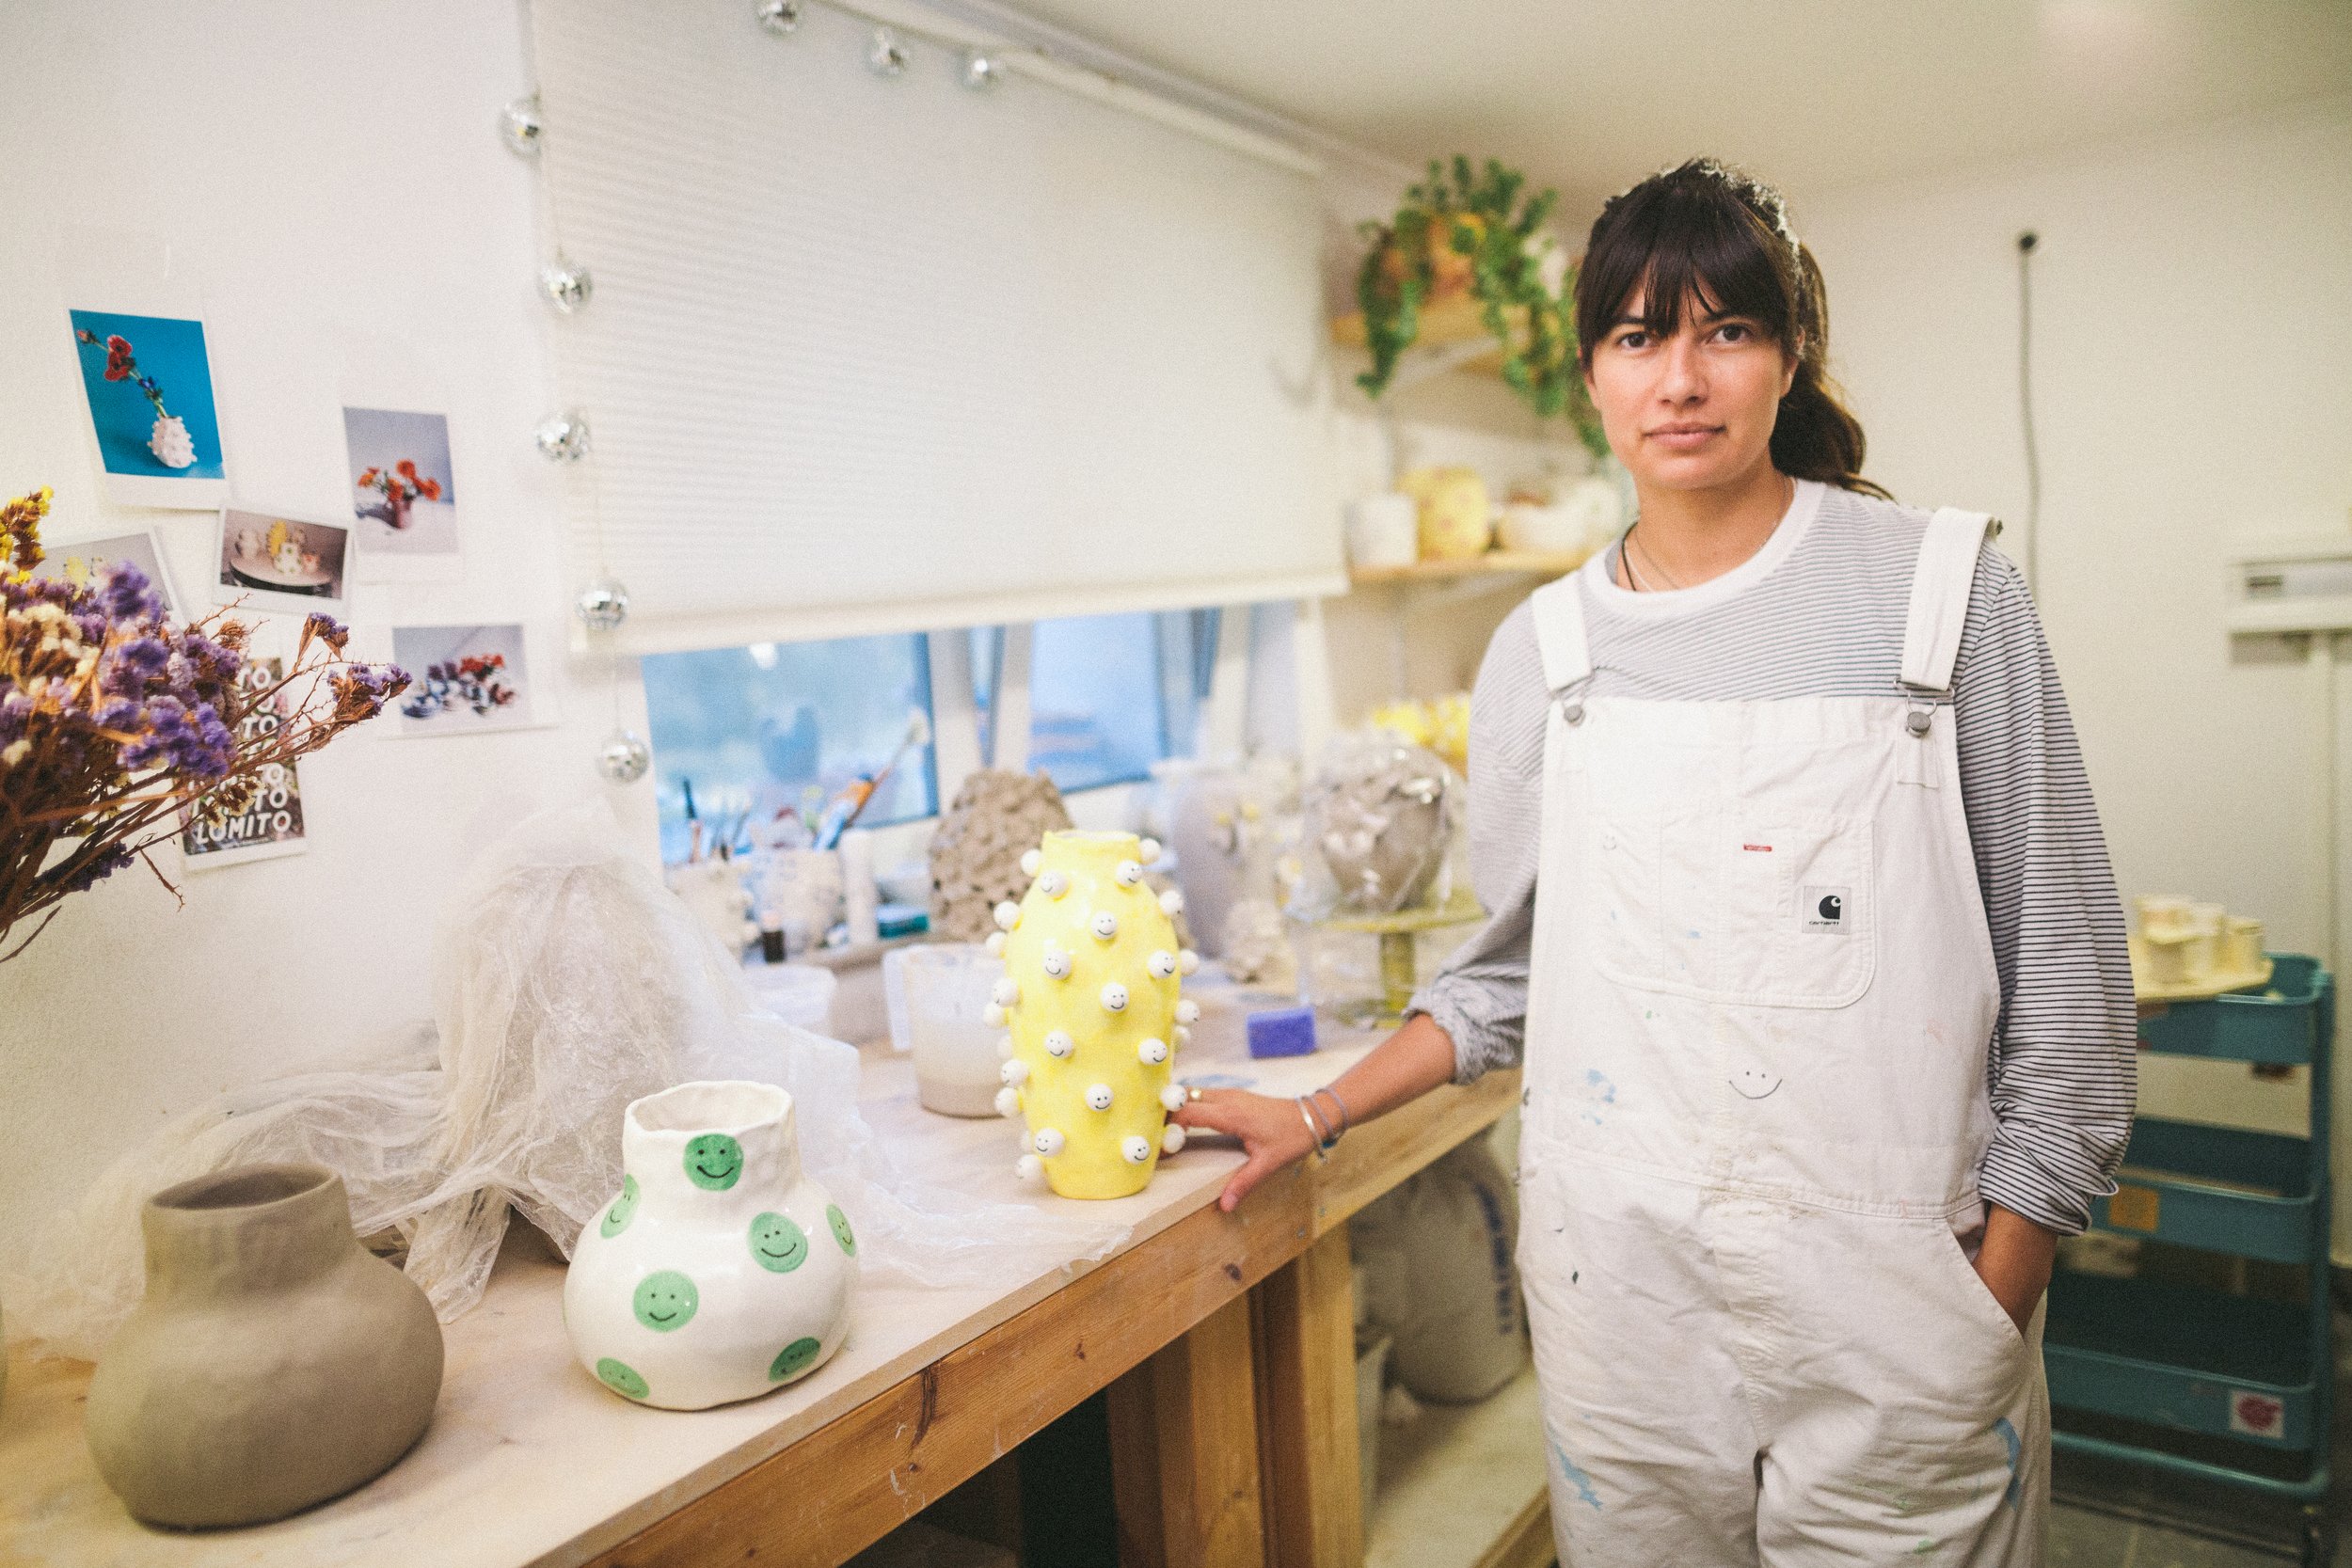 Ceramicist Margarita Mylona with some of her work in her studio